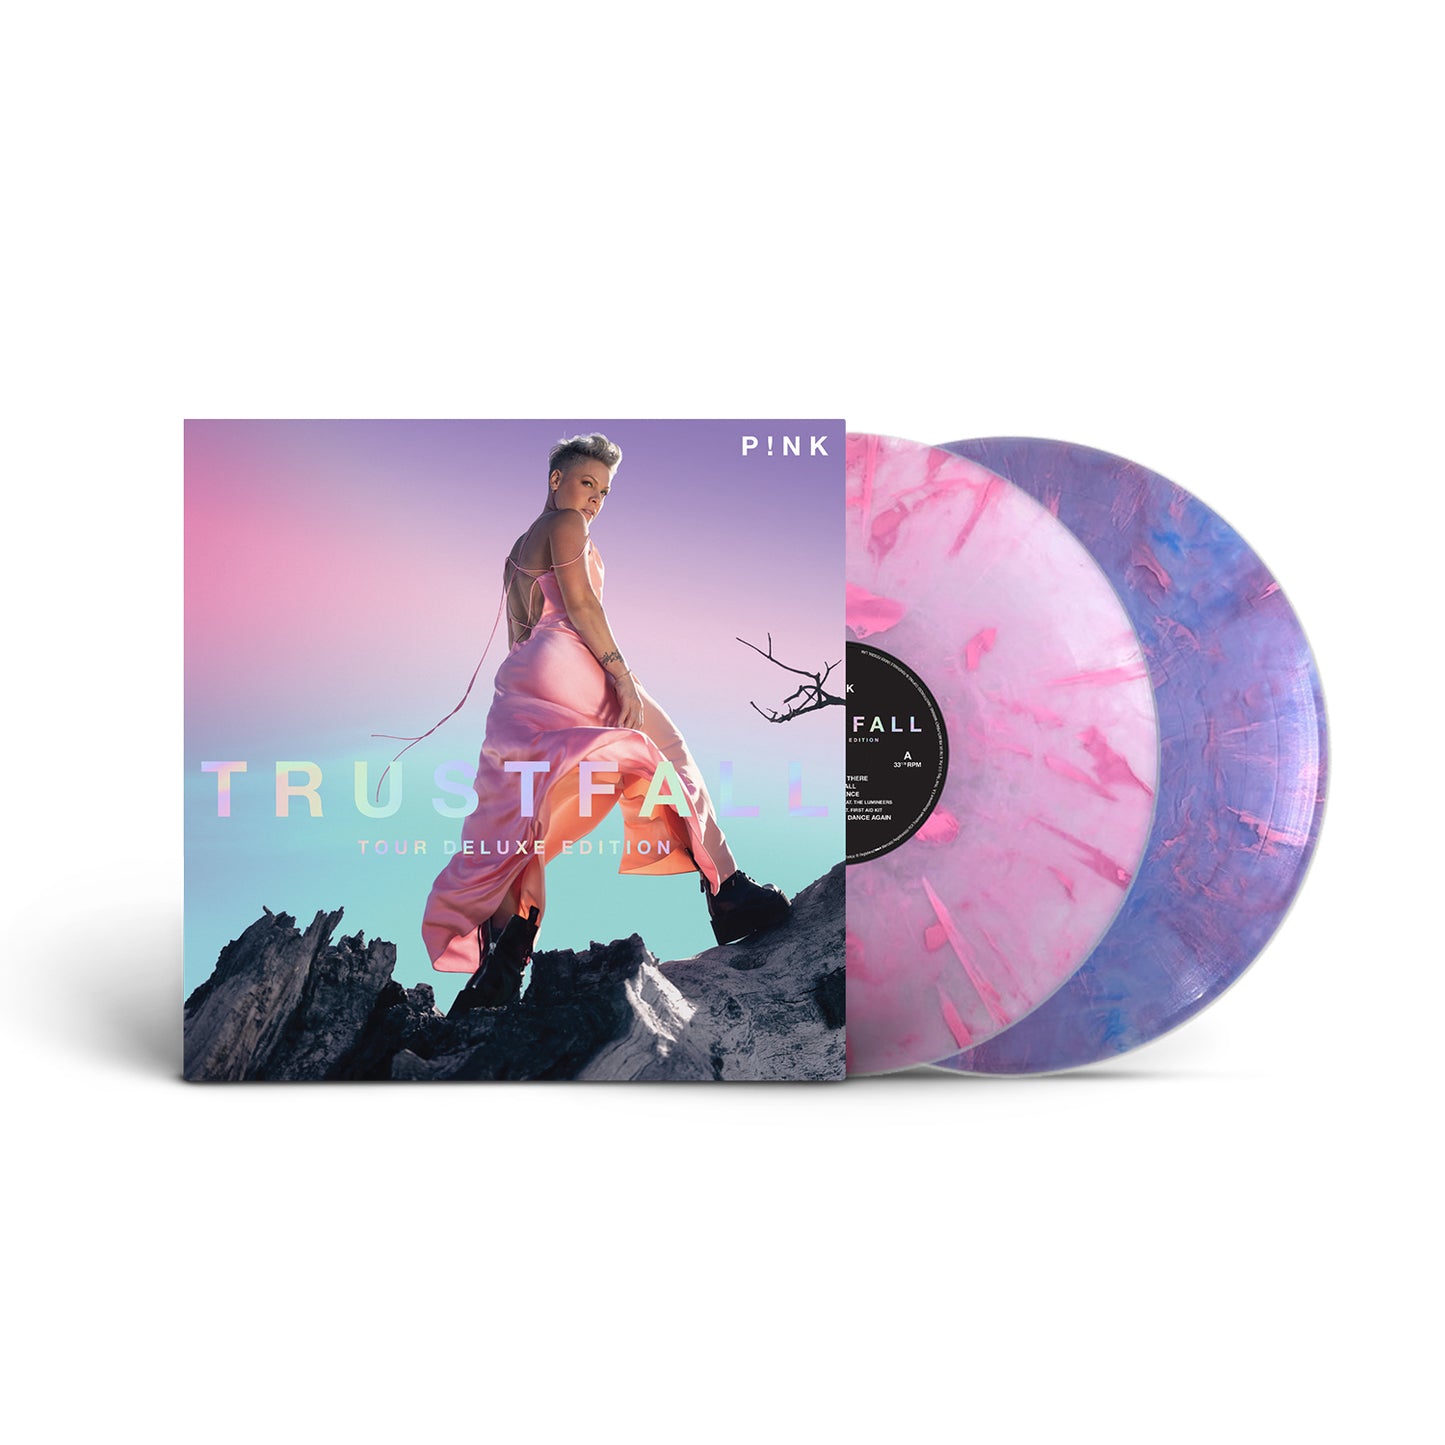 P!nk - TRUSTFALL (Tour Deluxe Edition) 2xLP